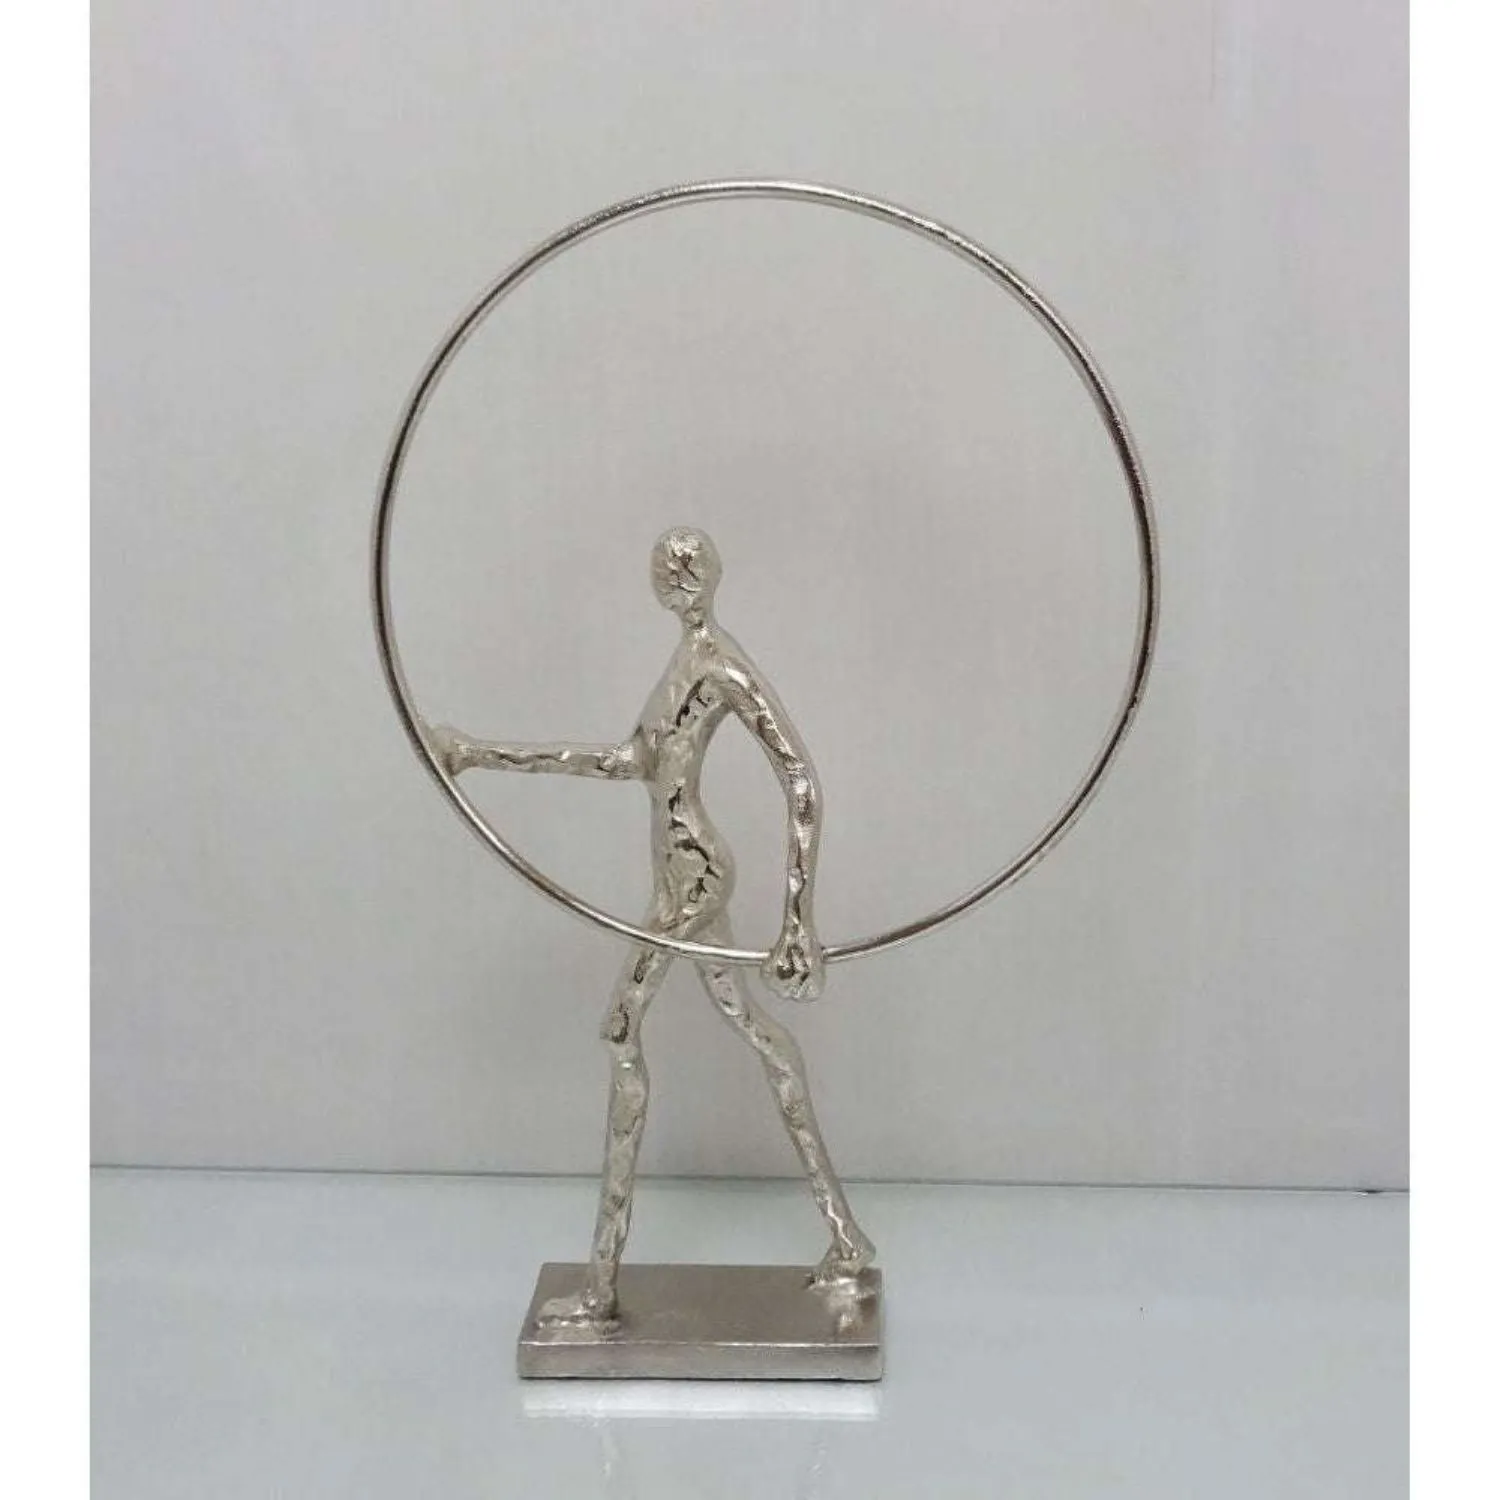 Mint Homeware Man with Ring Sculpture Nickel